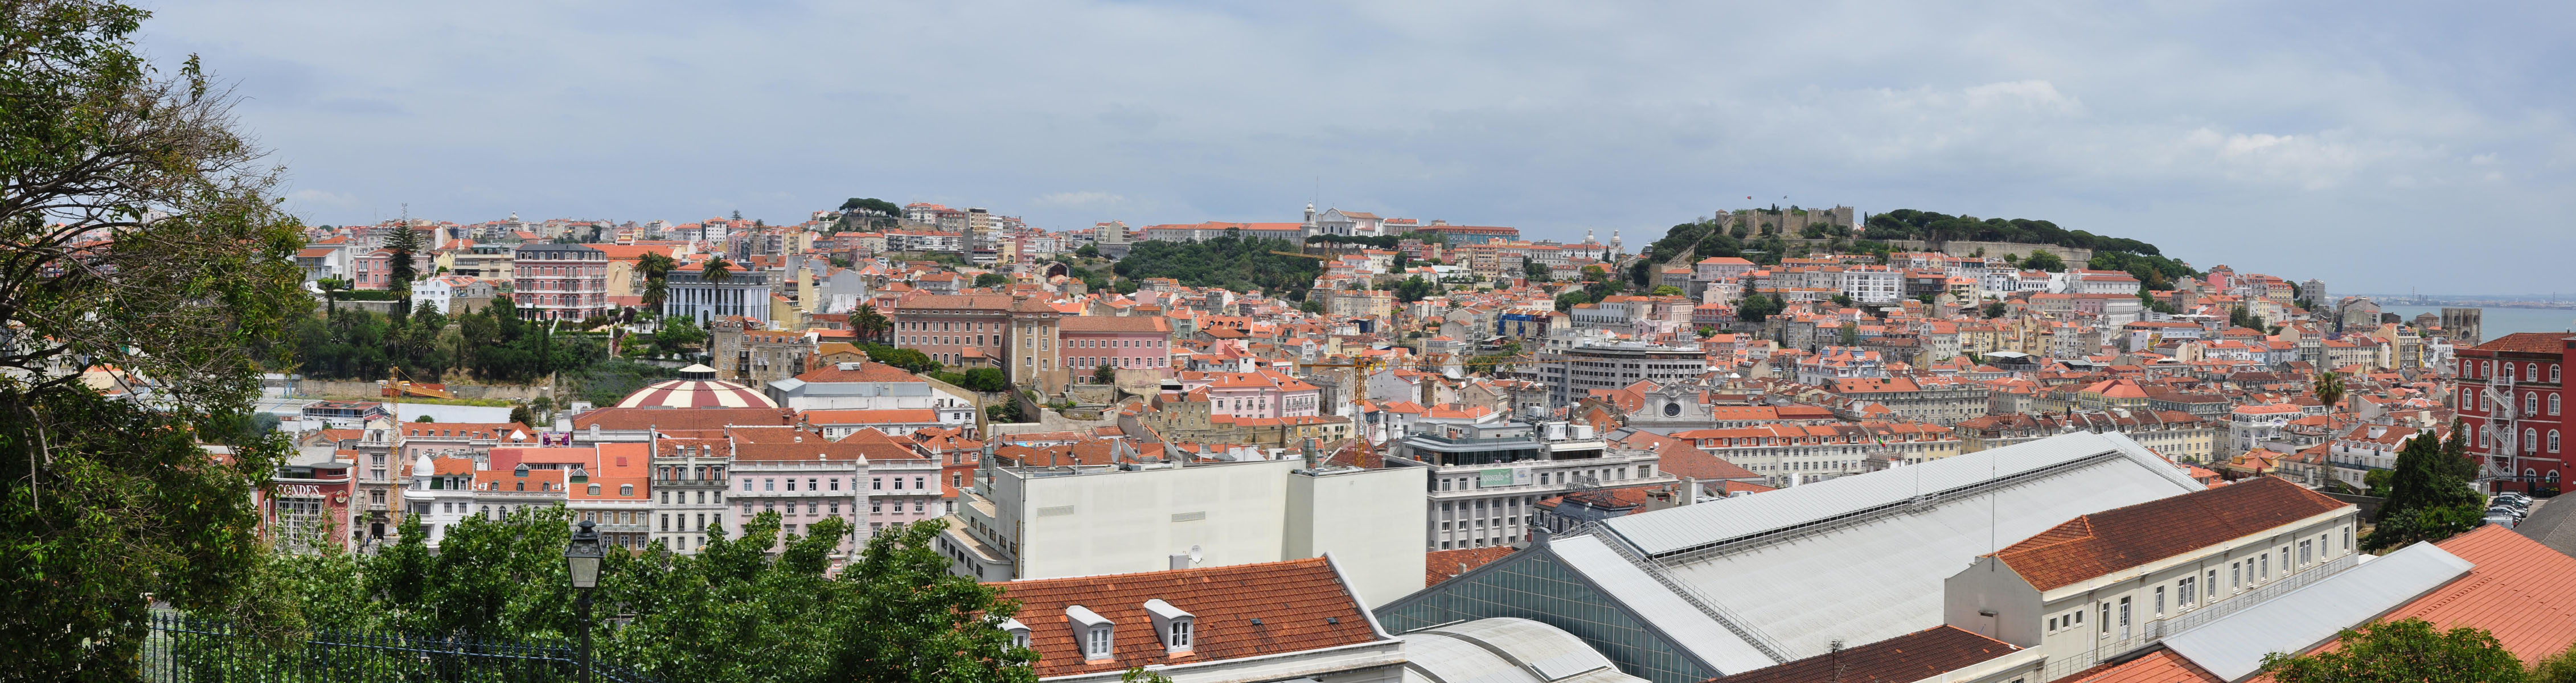 Lisbon - Portugal.jpg